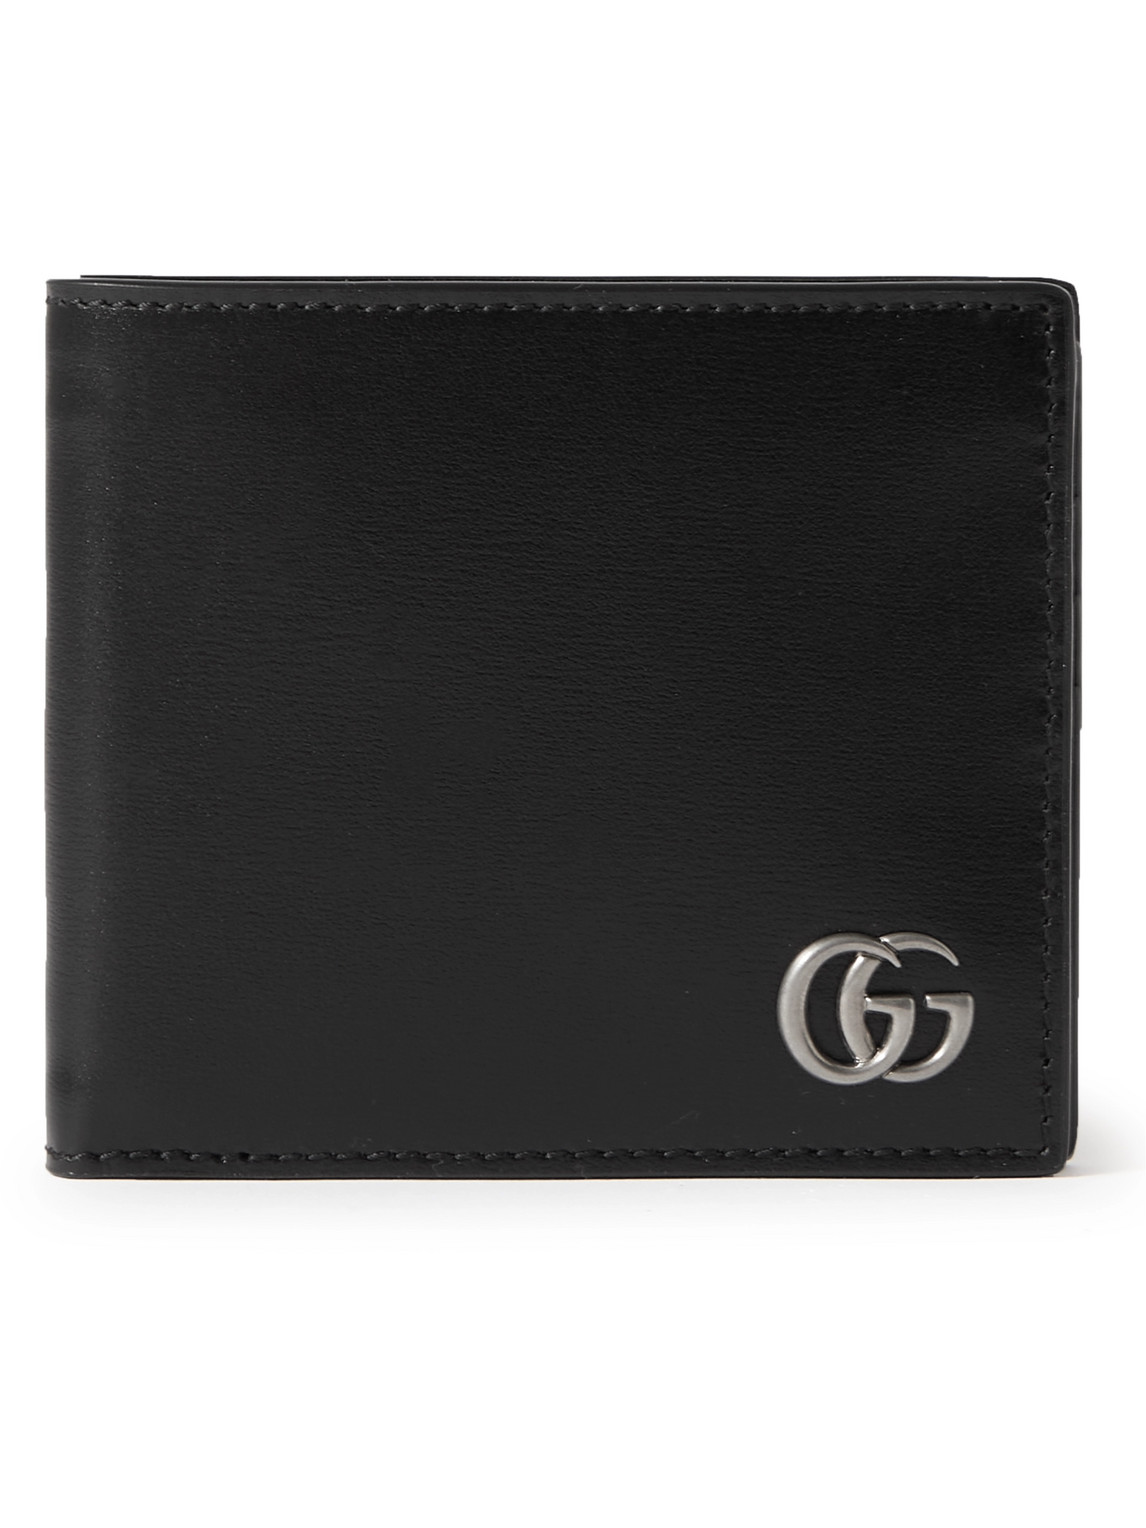 GUCCI - GG Marmont Leather Billfold Wallet - Men - Black